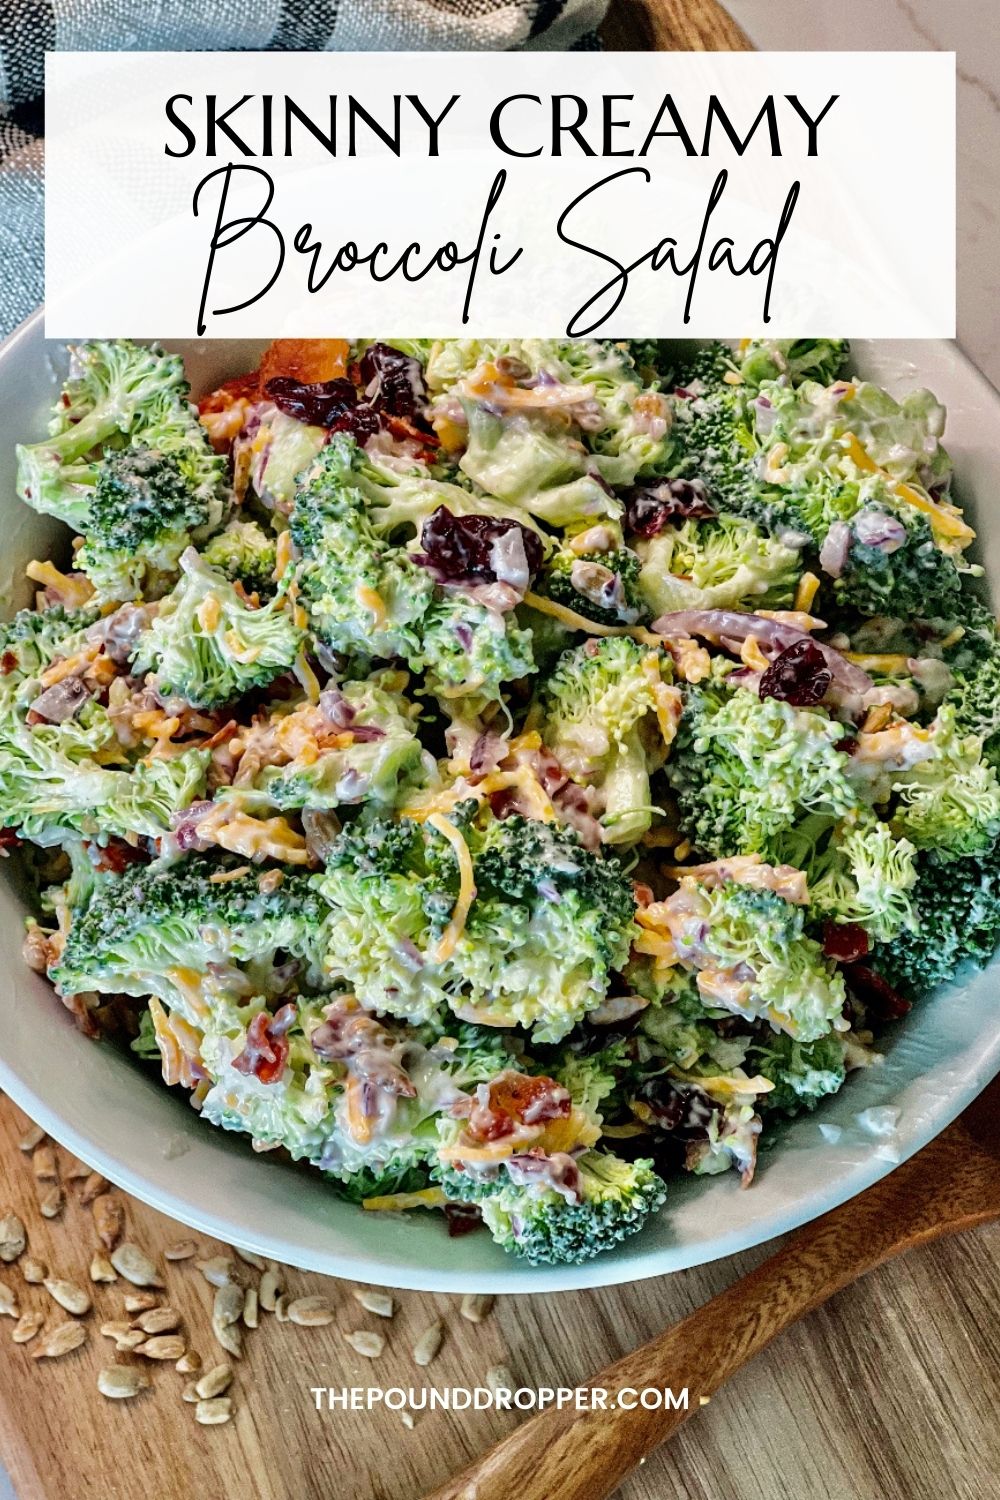 Skinny Creamy Broccoli Salad via @pounddropper